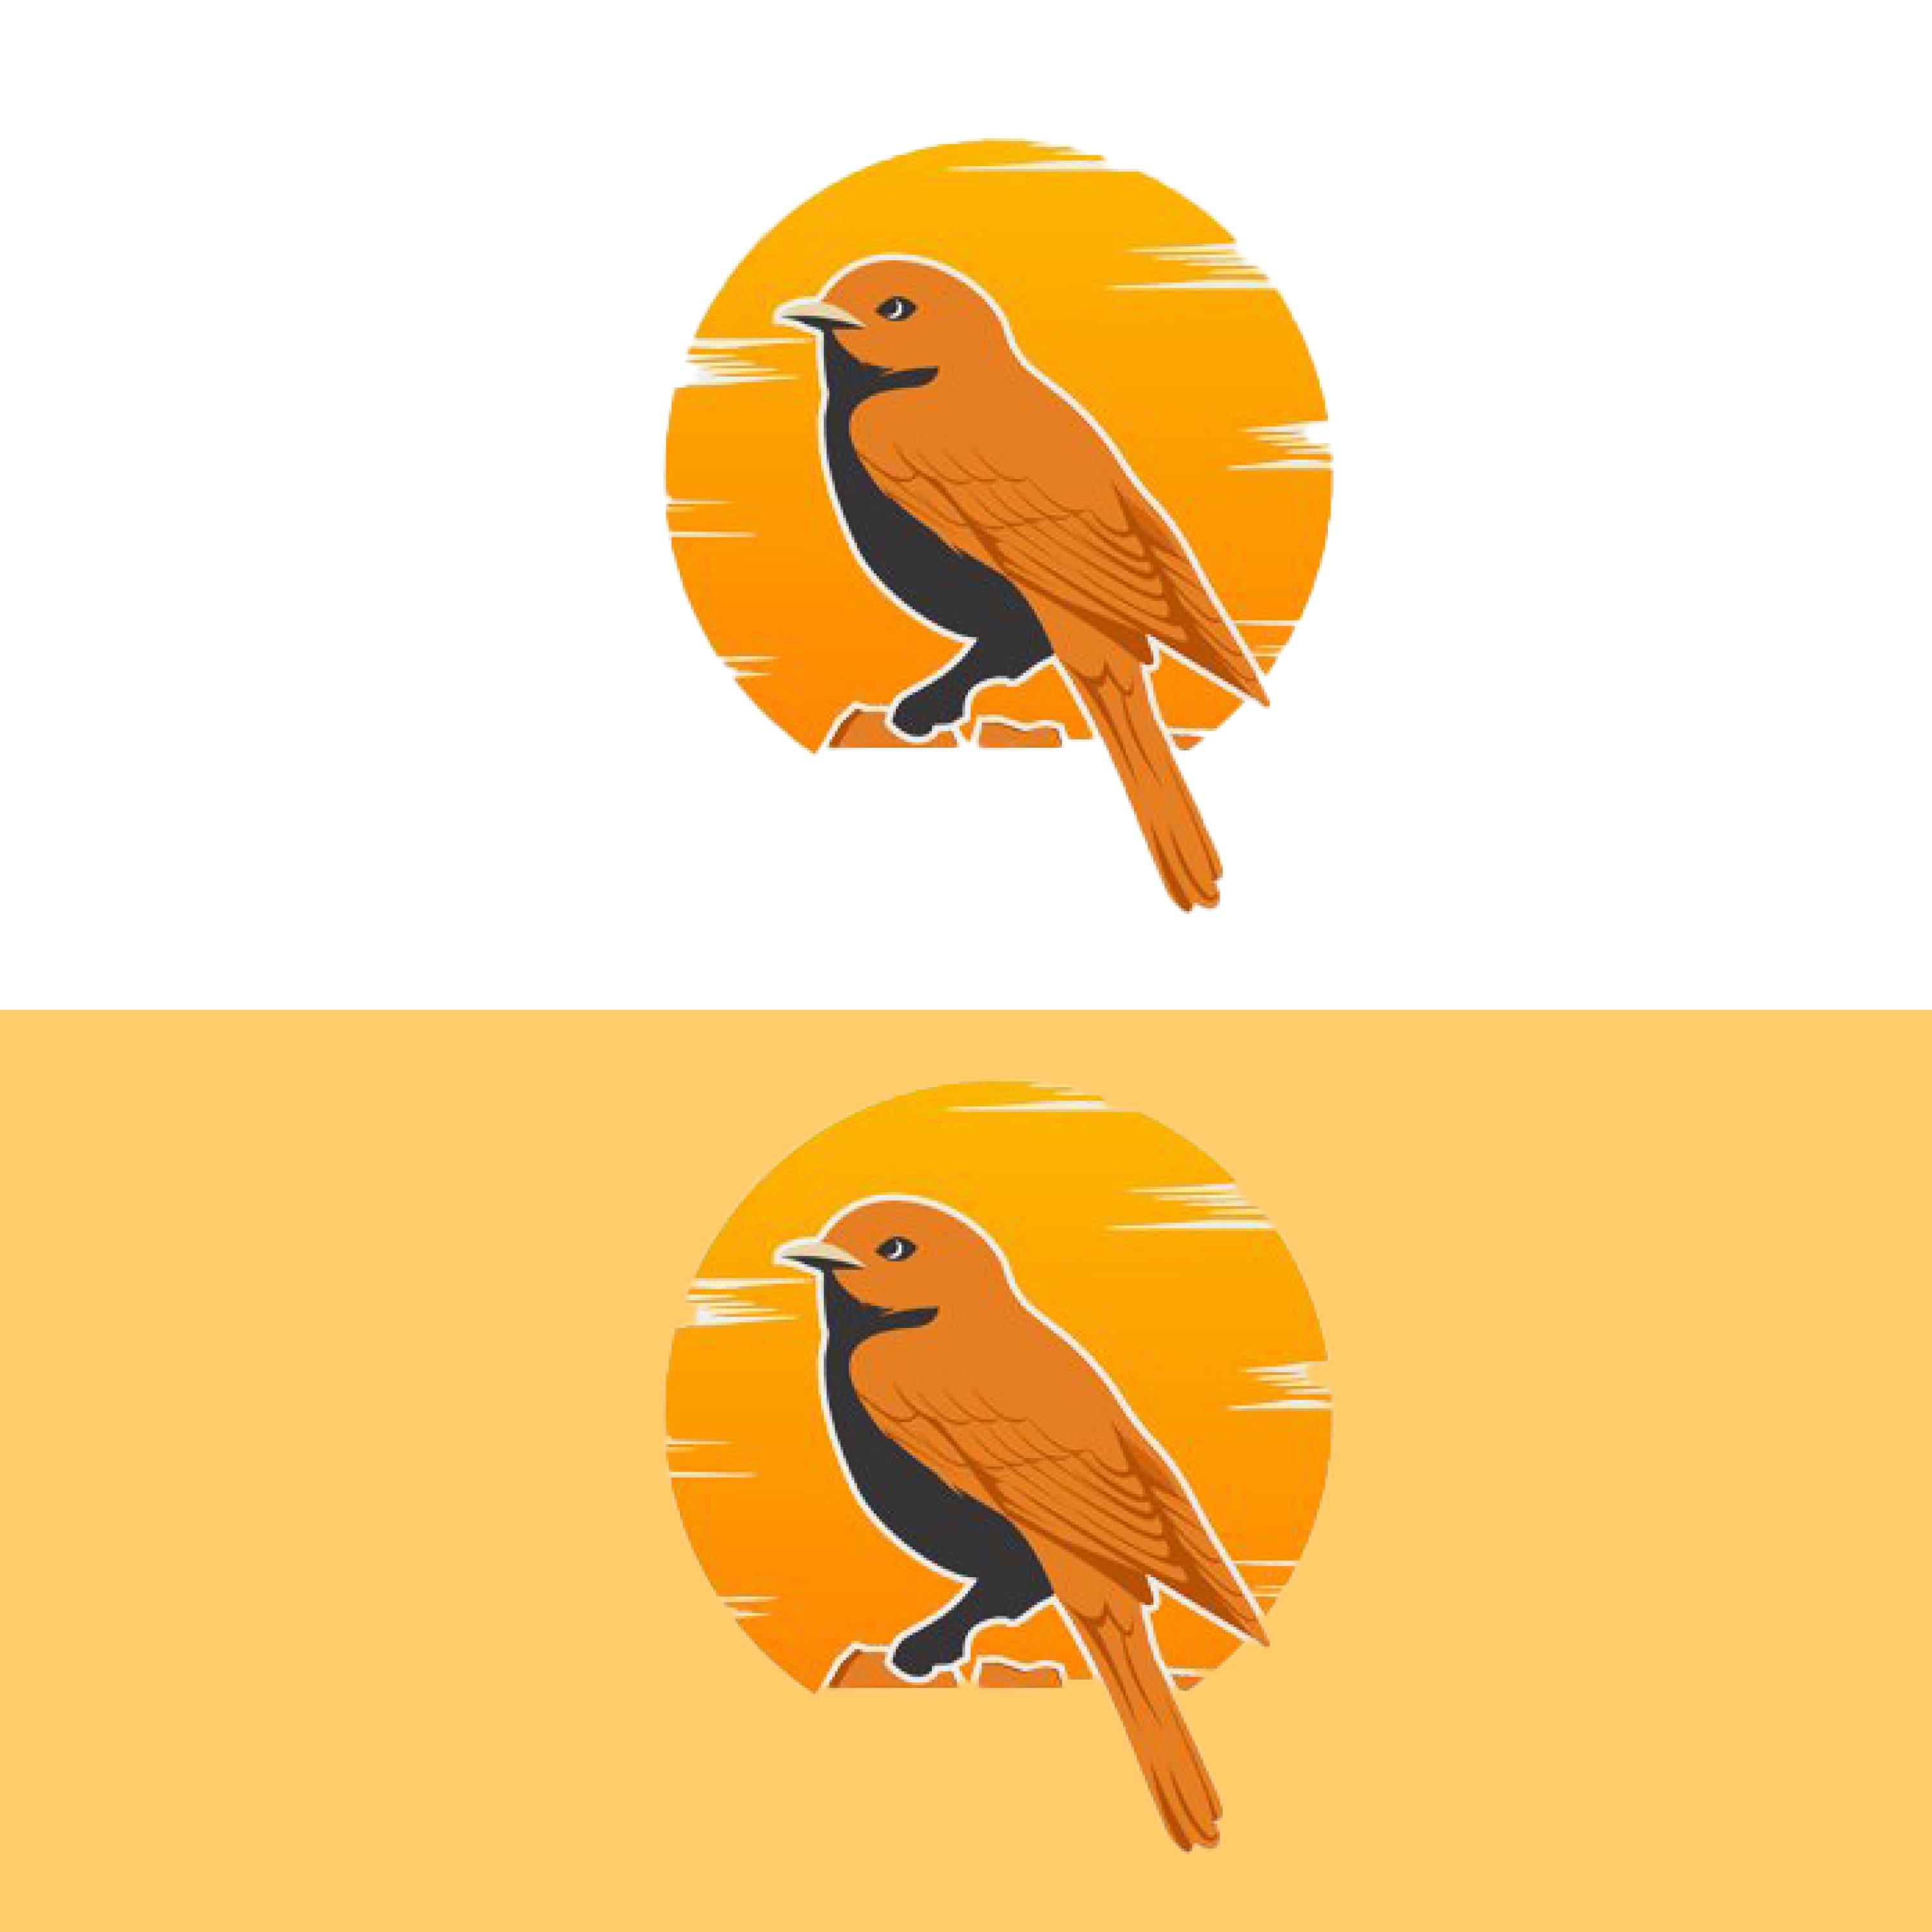 Canary bird logo design vector illustration cover.